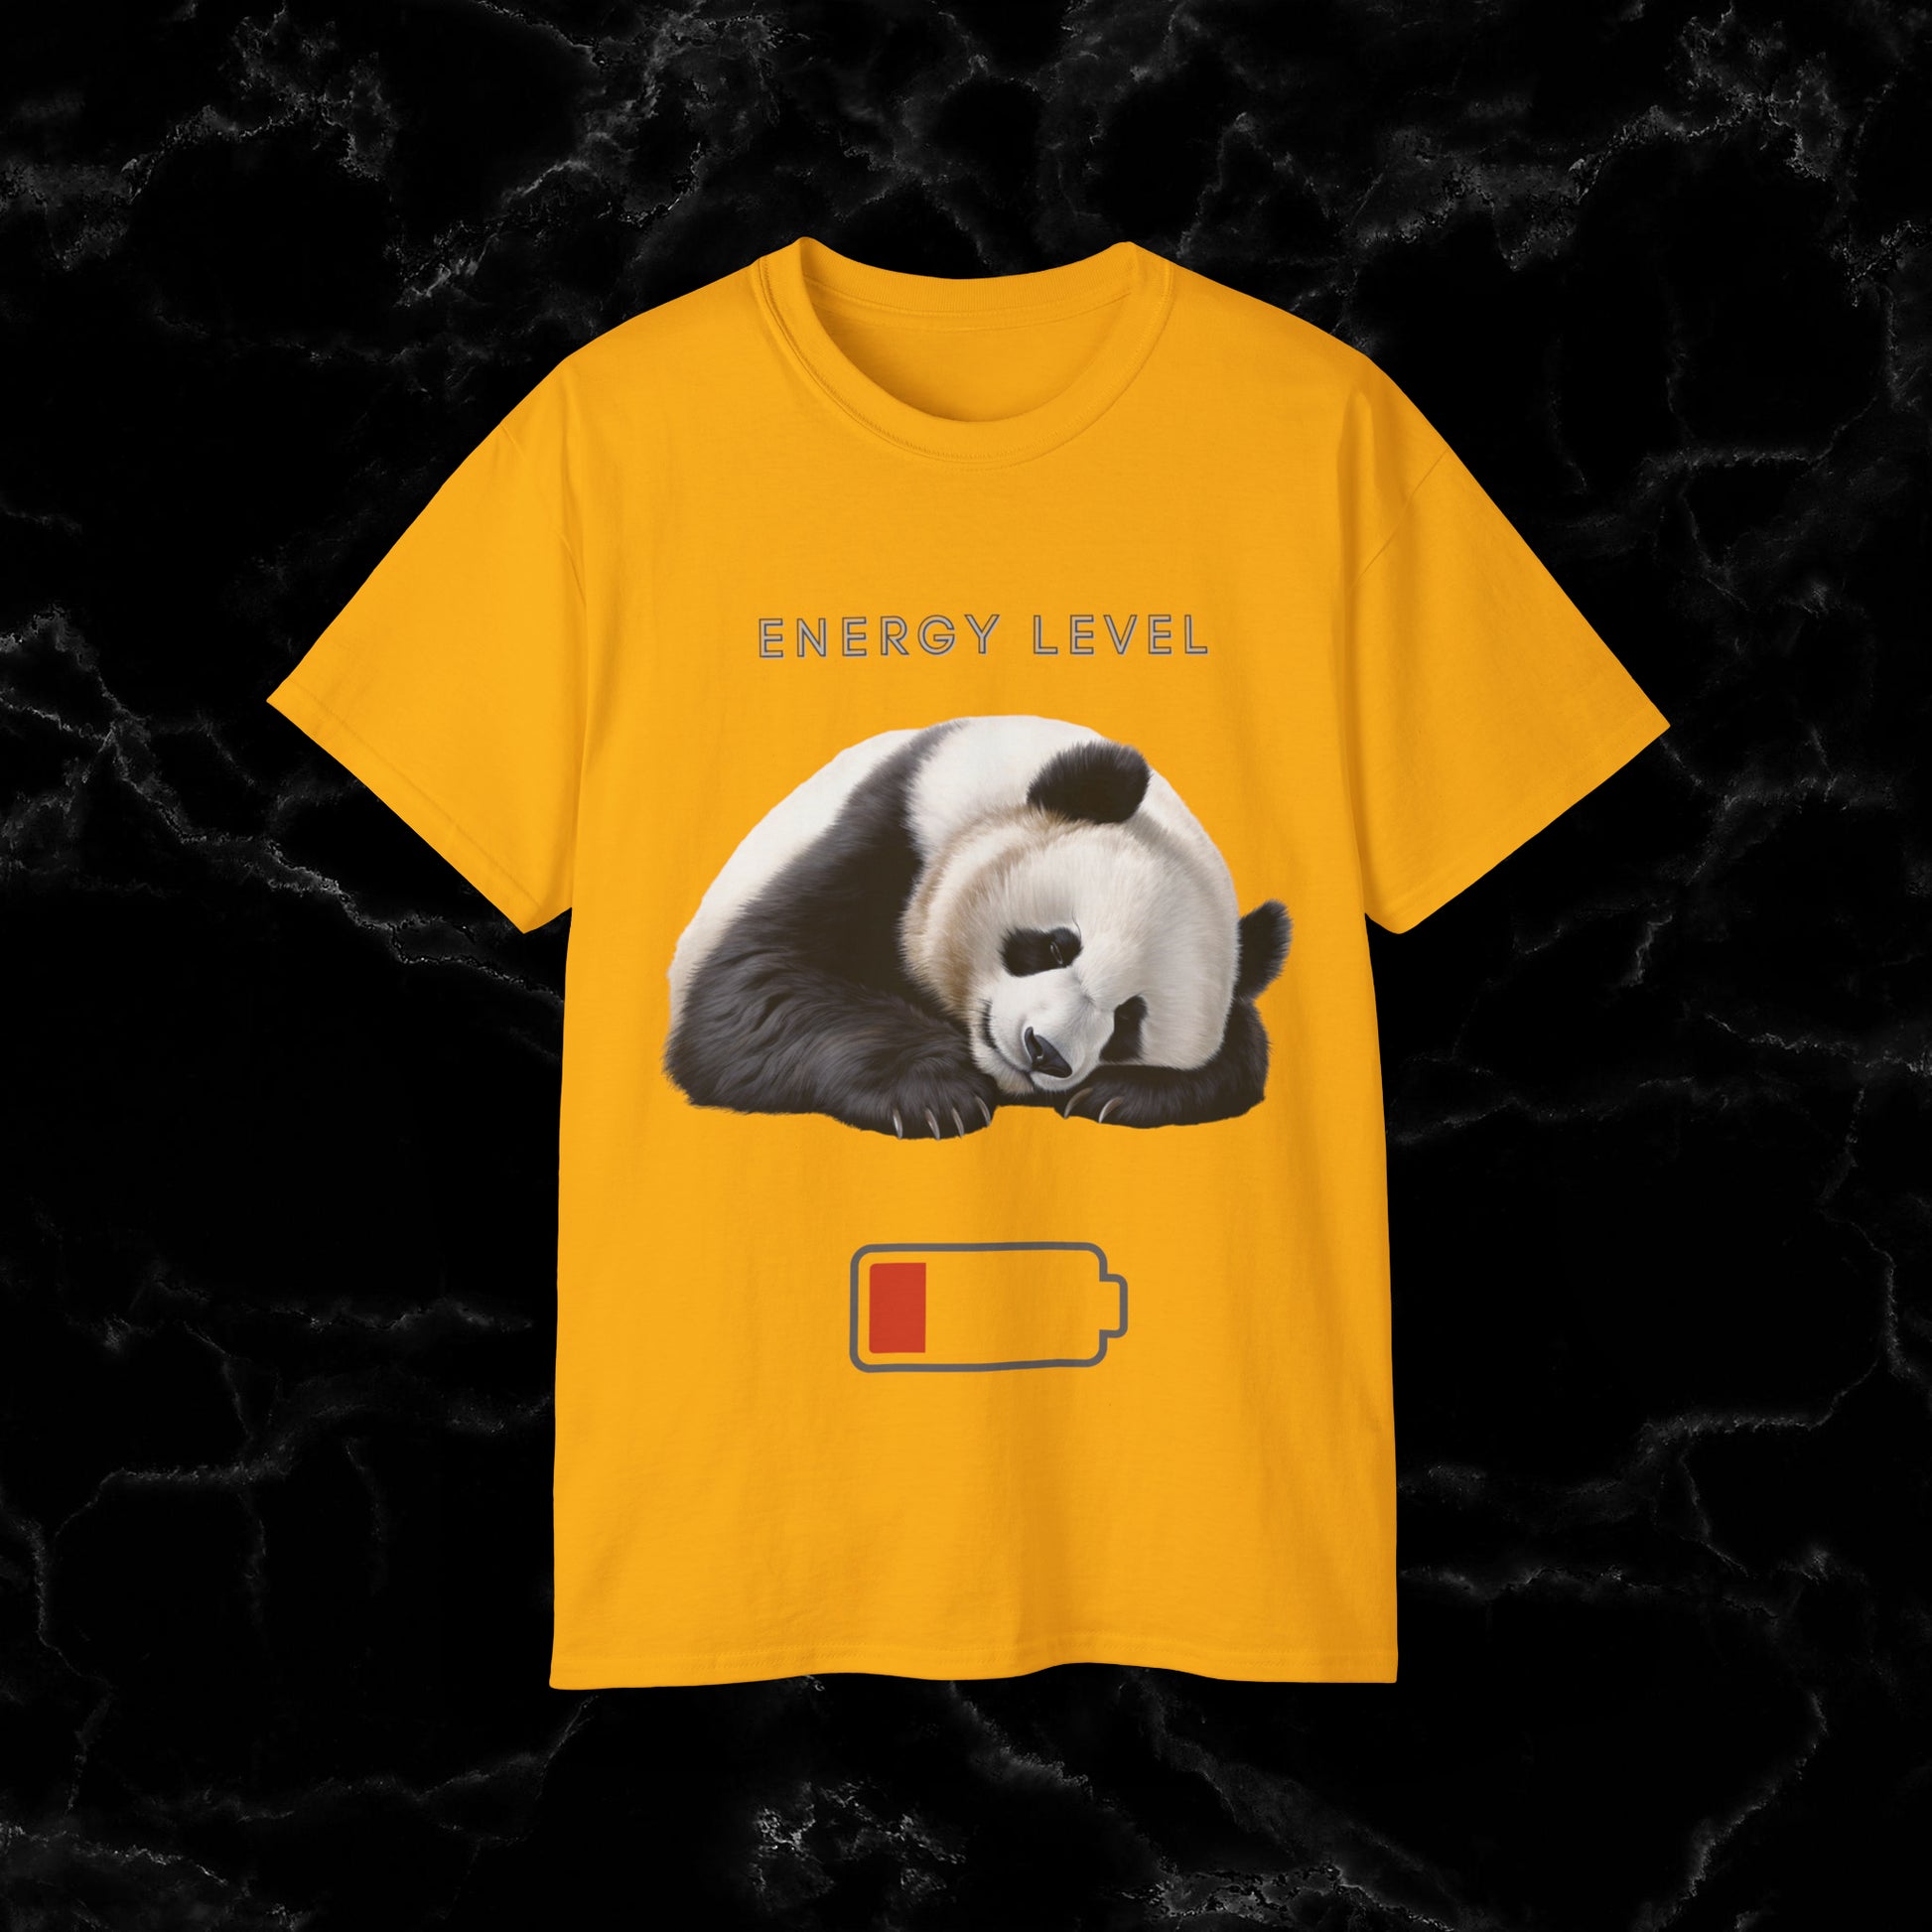 Nap Time Panda Unisex Funny Tee - Hilarious Panda Nap Design - Energy Level T-Shirt Gold S 